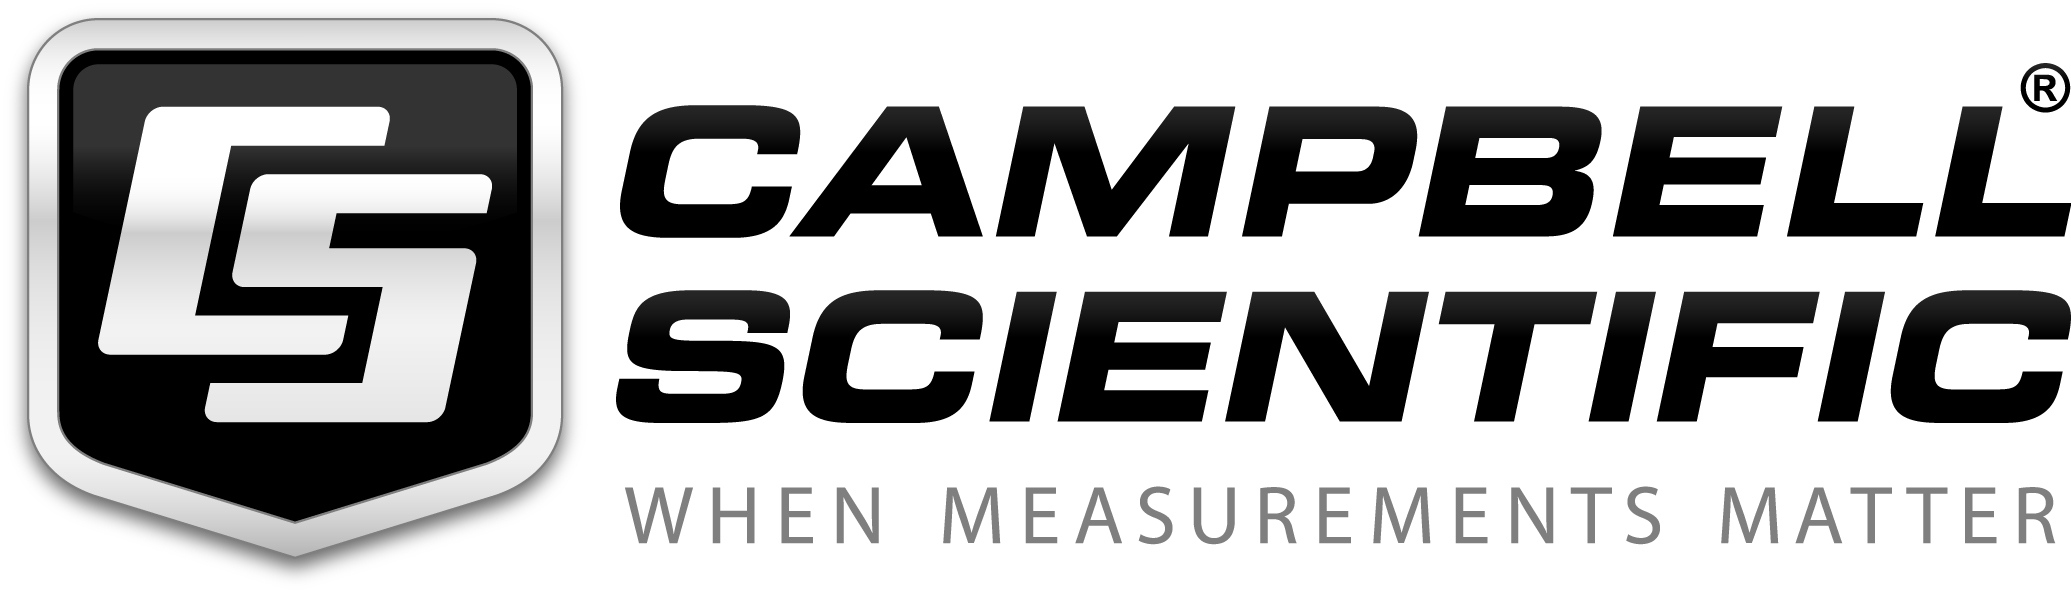 campbell scientific logo